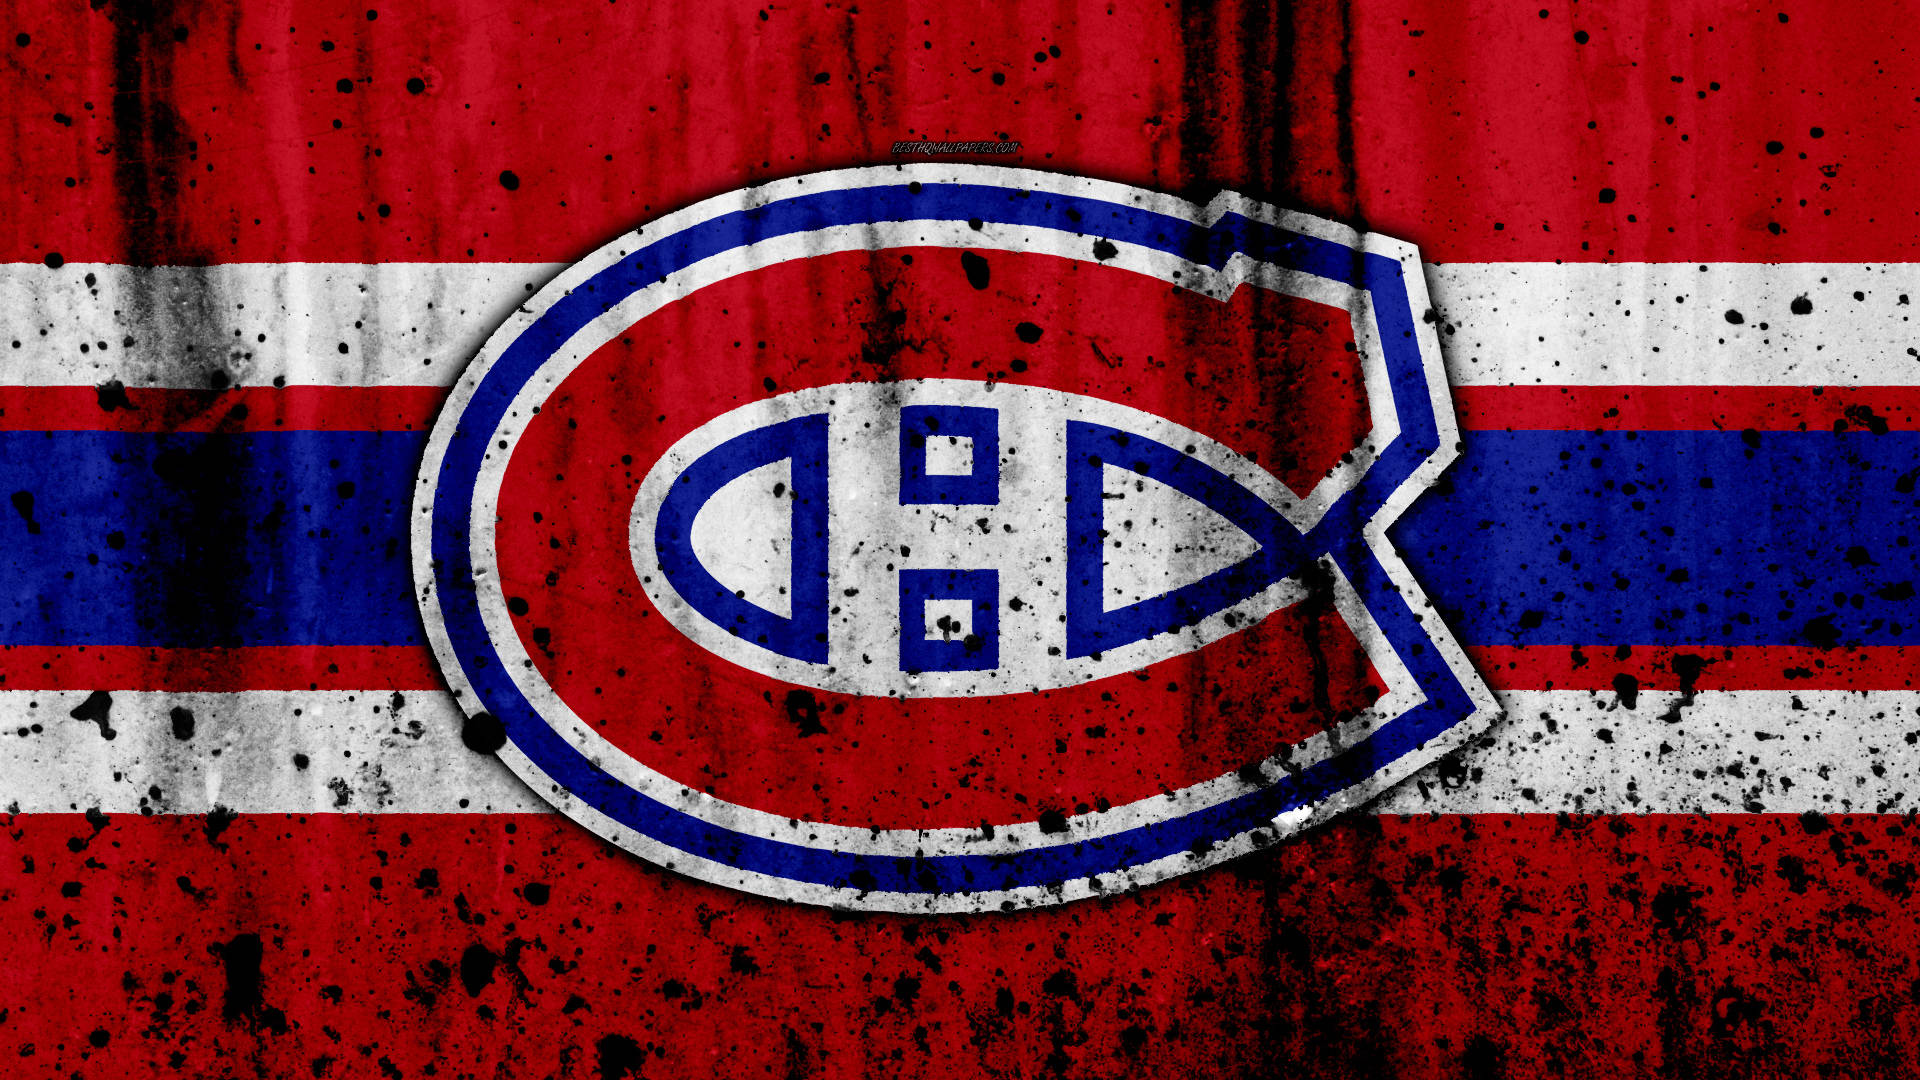 Tapet af Montreal Canadiens sportshold Wallpaper